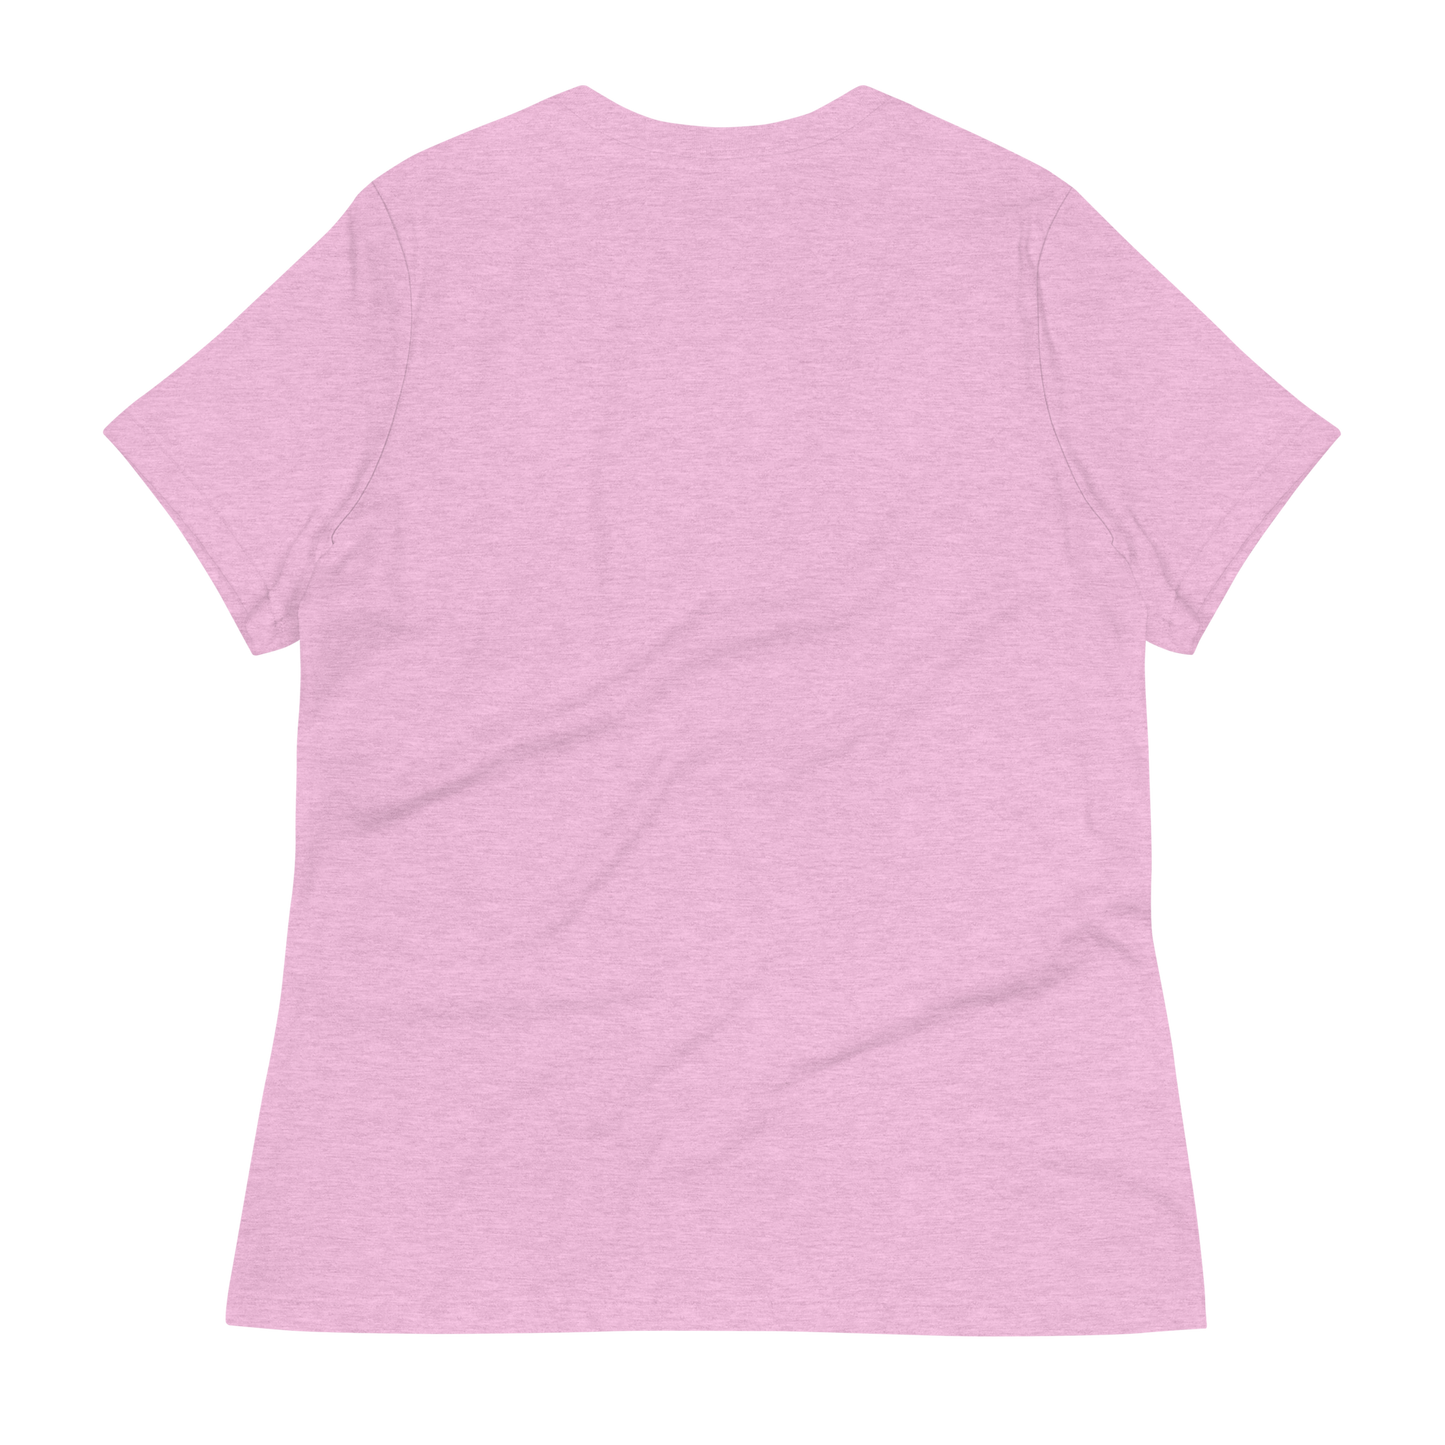 FTF BALLOONS - Women's Relaxed T-Shirt